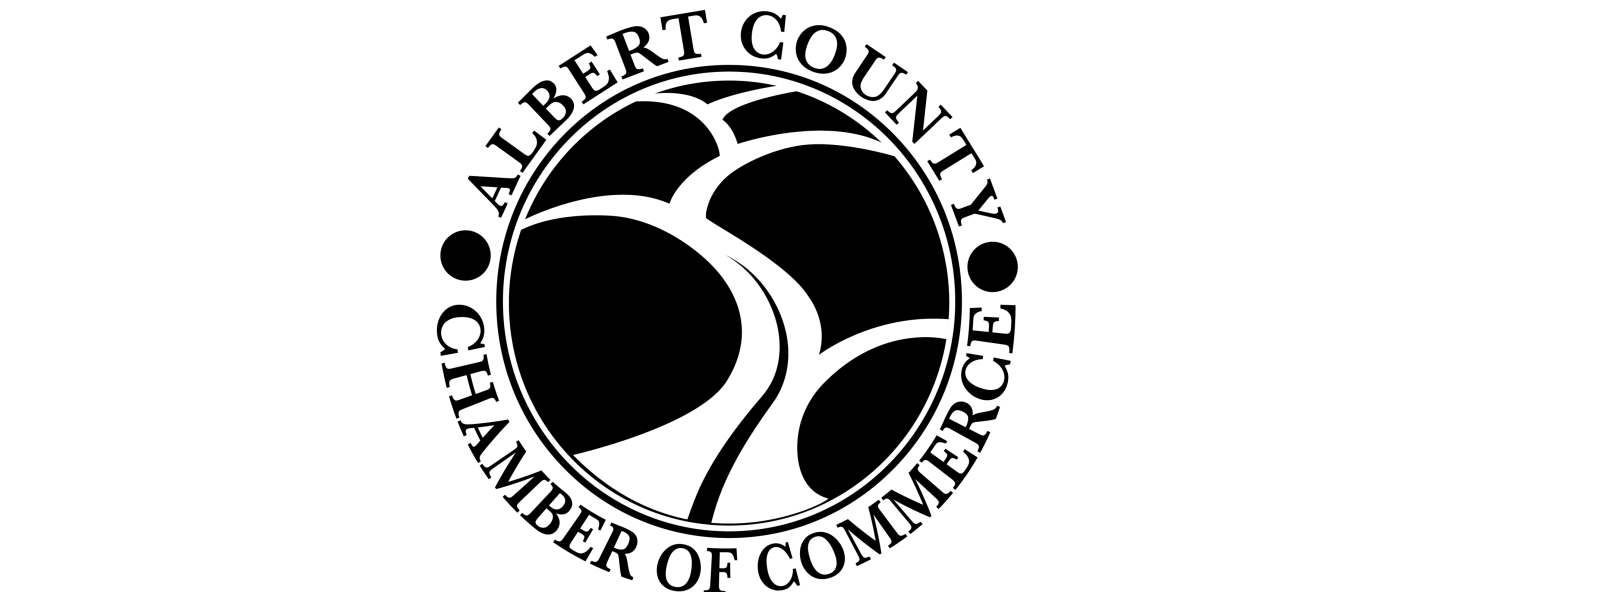 Albert County Chamber of Commerce